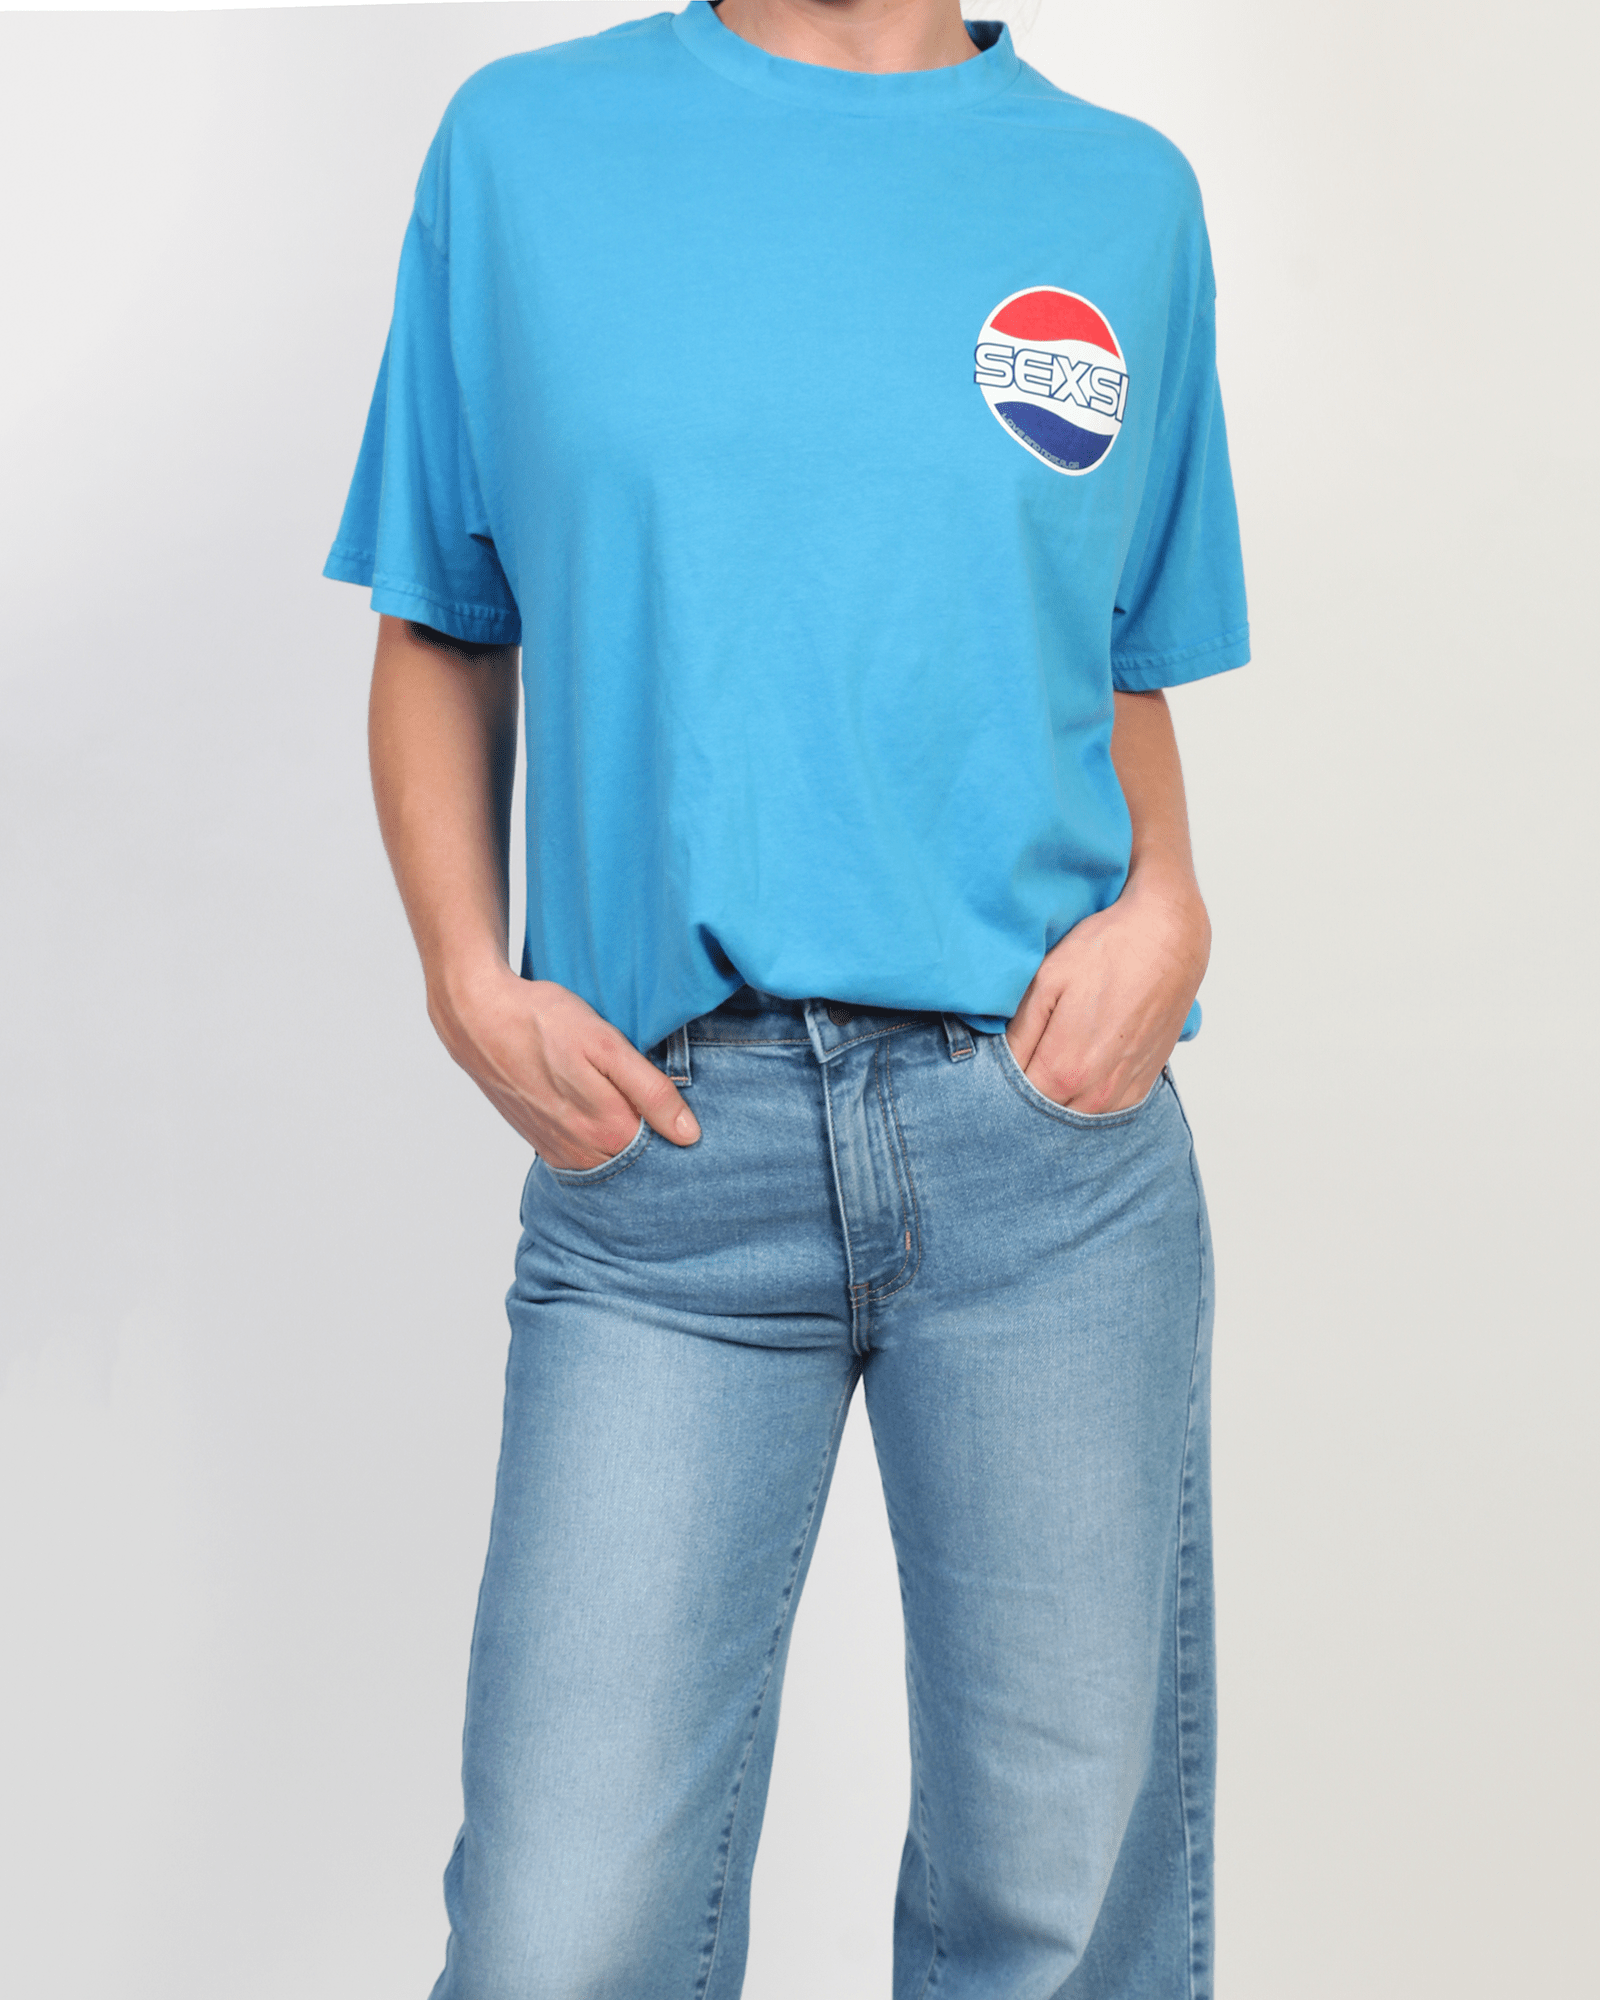 Sexsi T-Shirt - True Blue